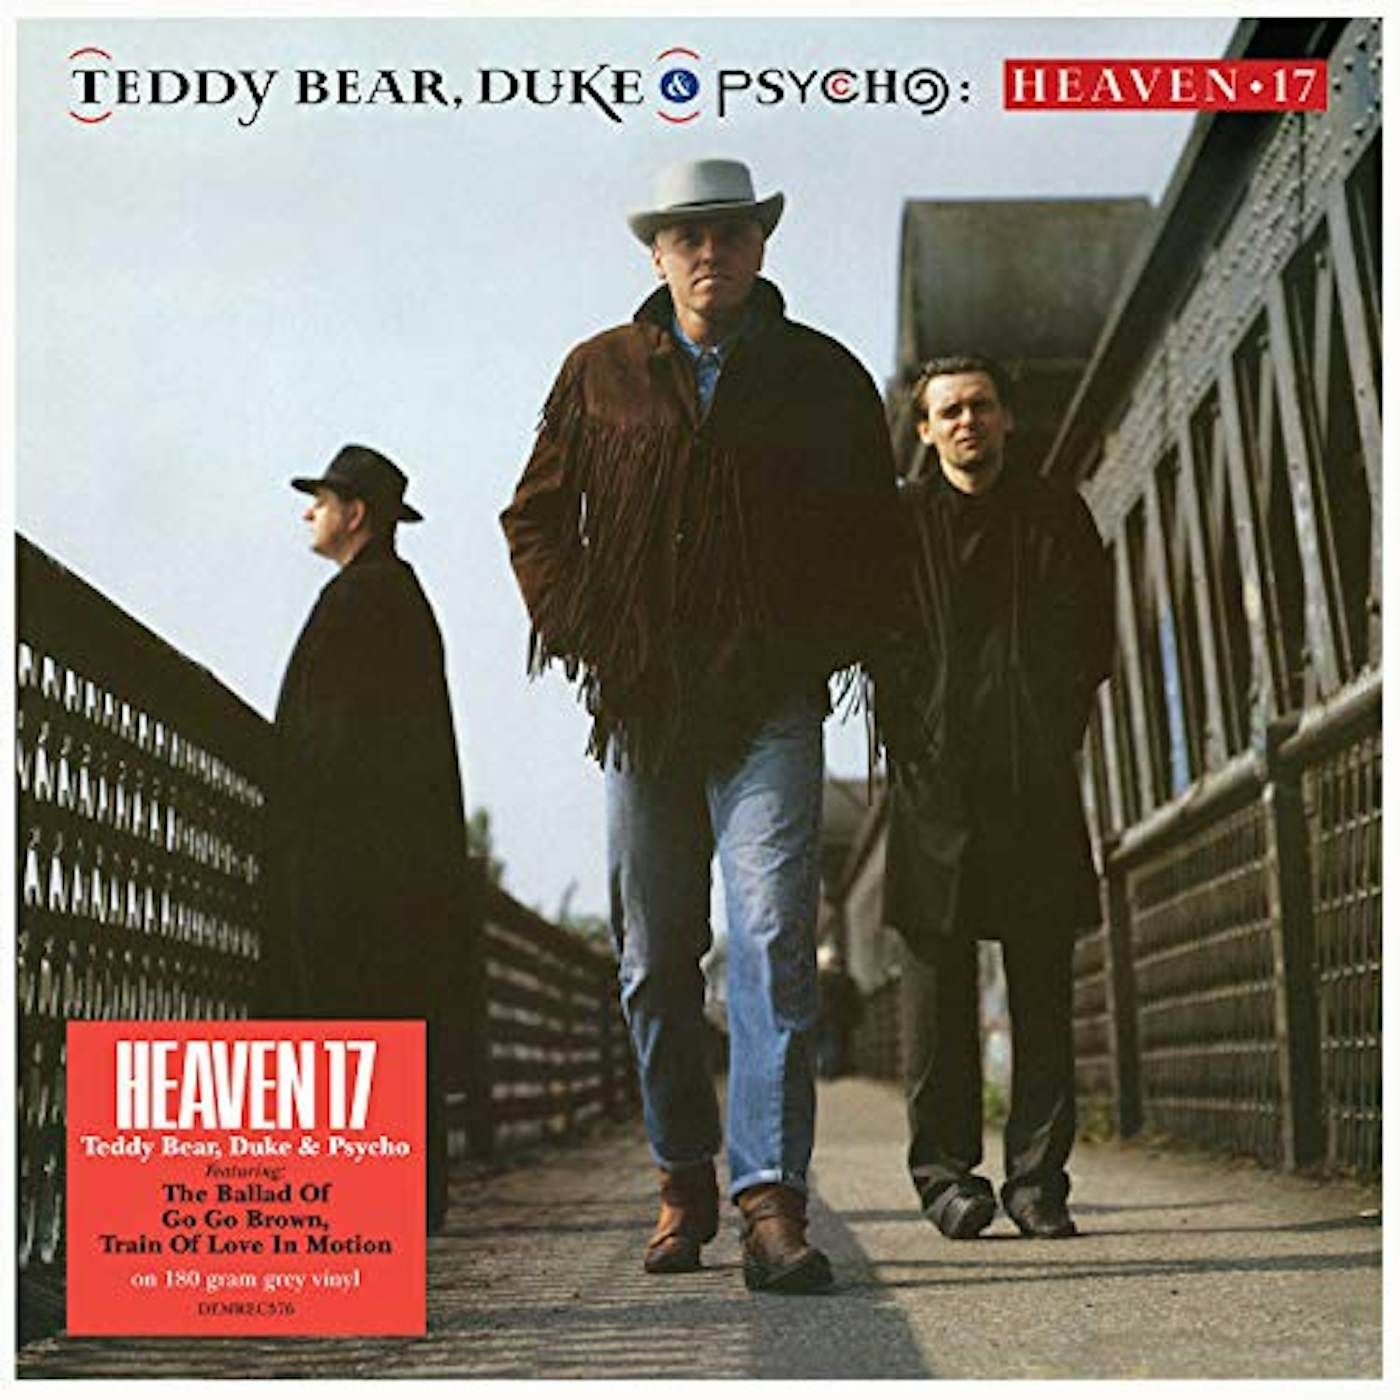 Heaven 17 TEDDY BEAR DUKE & PSYCHO Vinyl Record